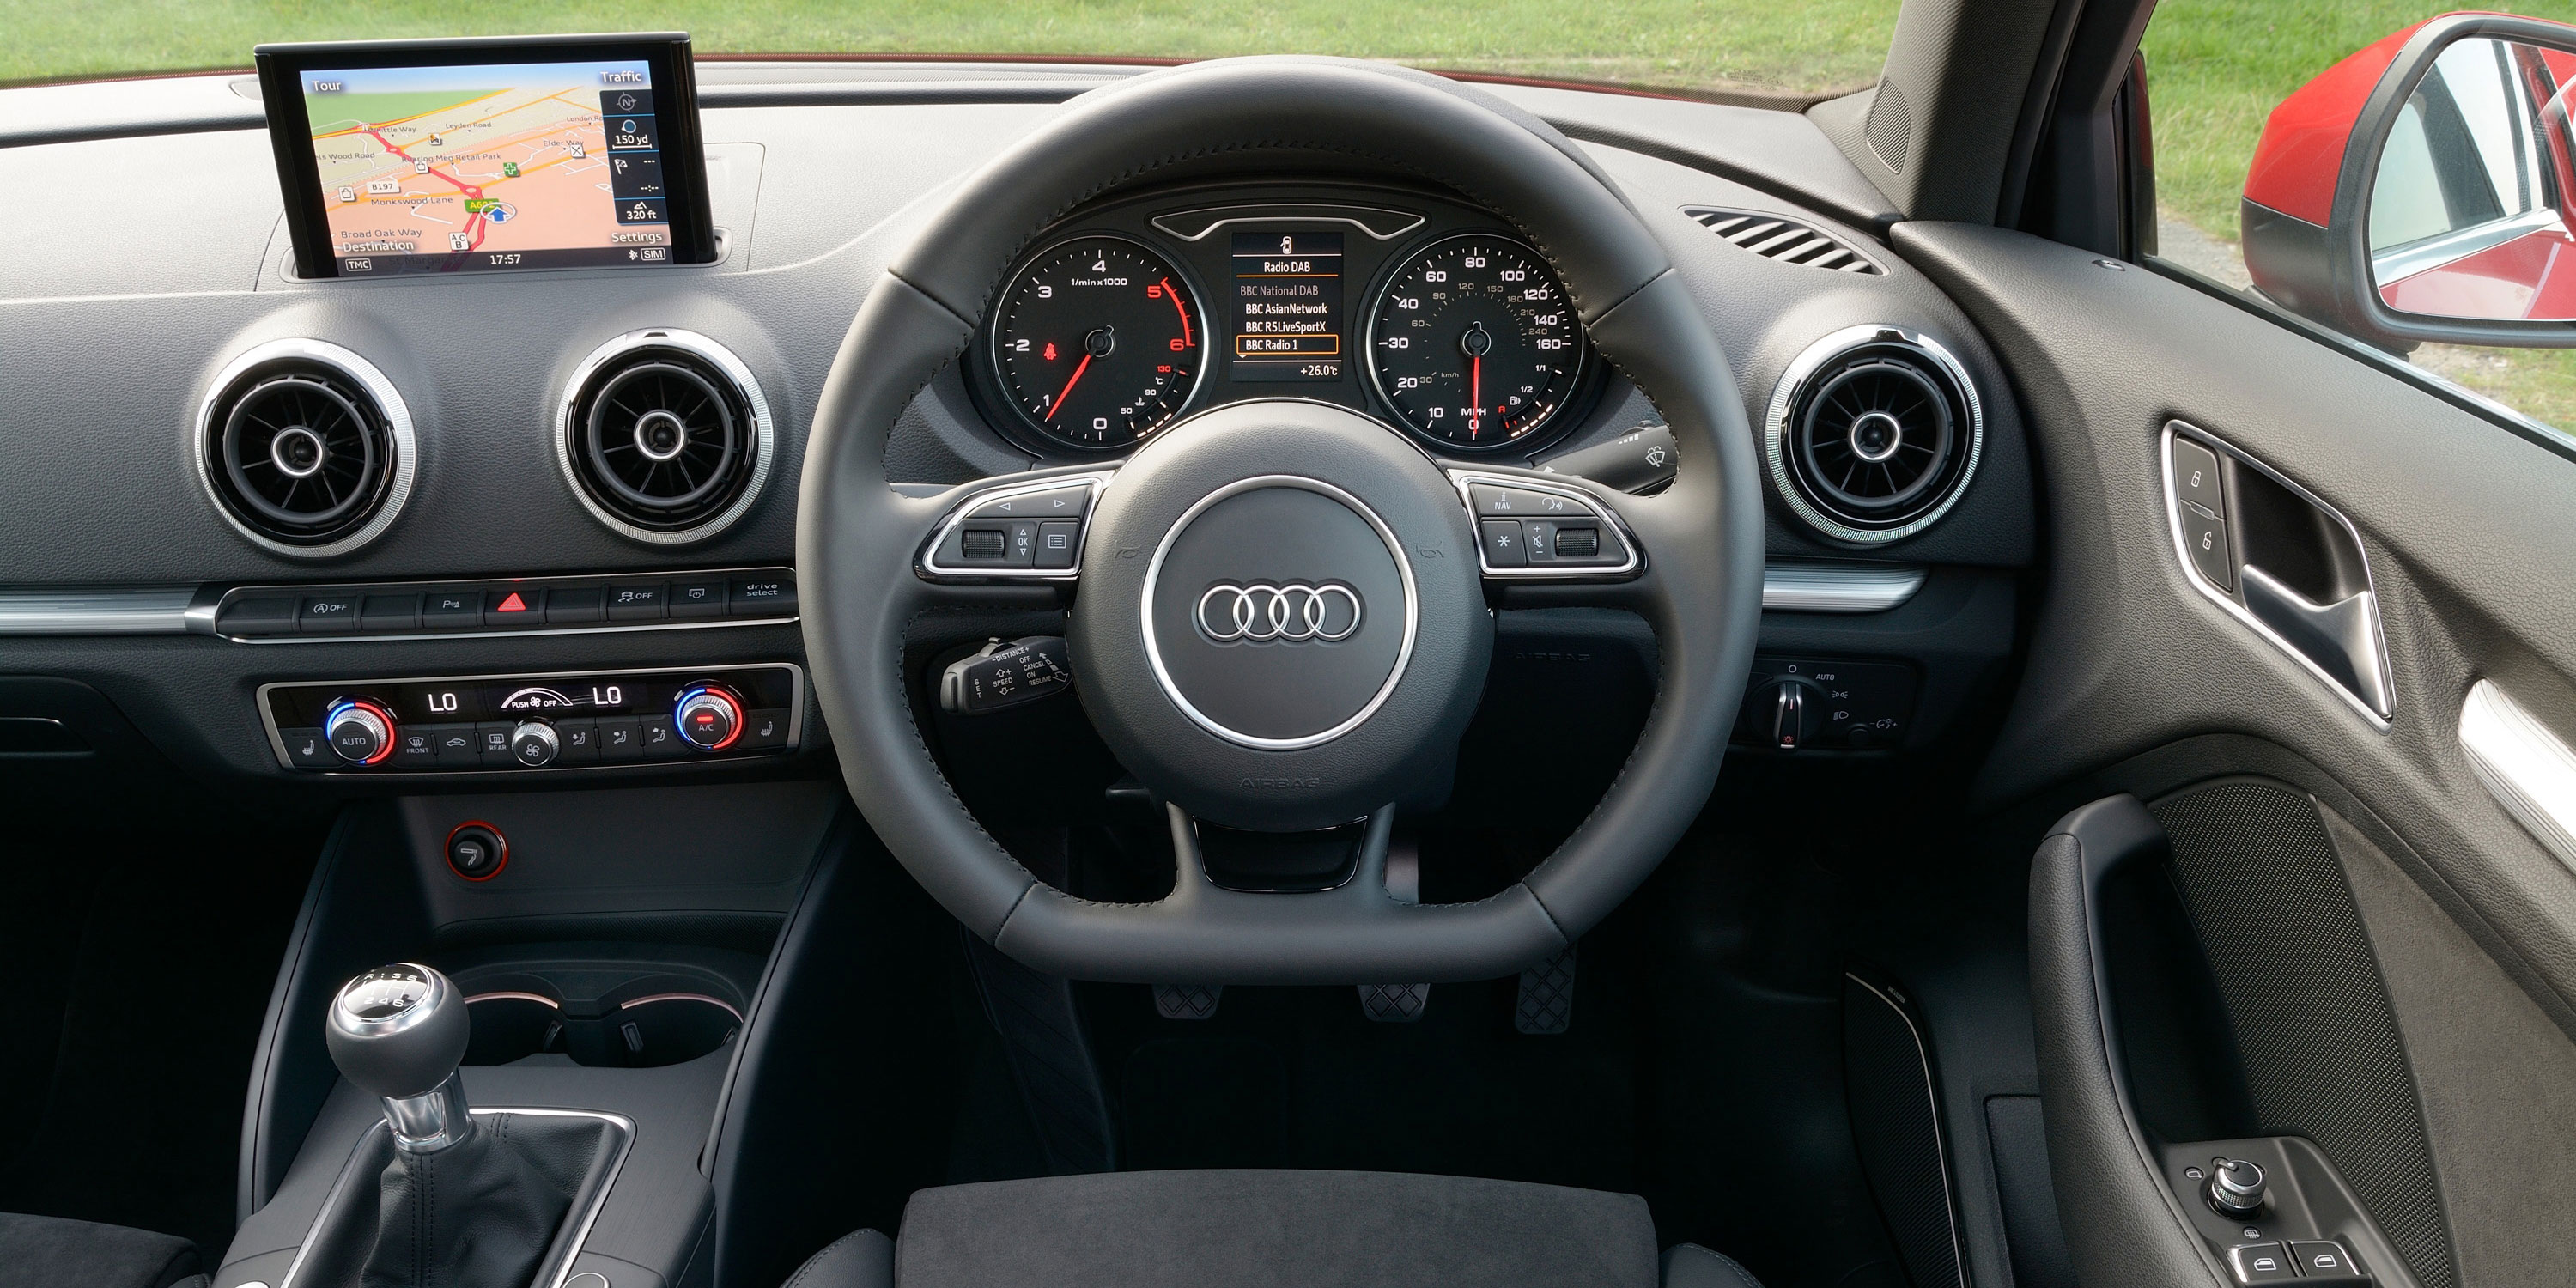 Audi A3 S Line 2018 Interior
